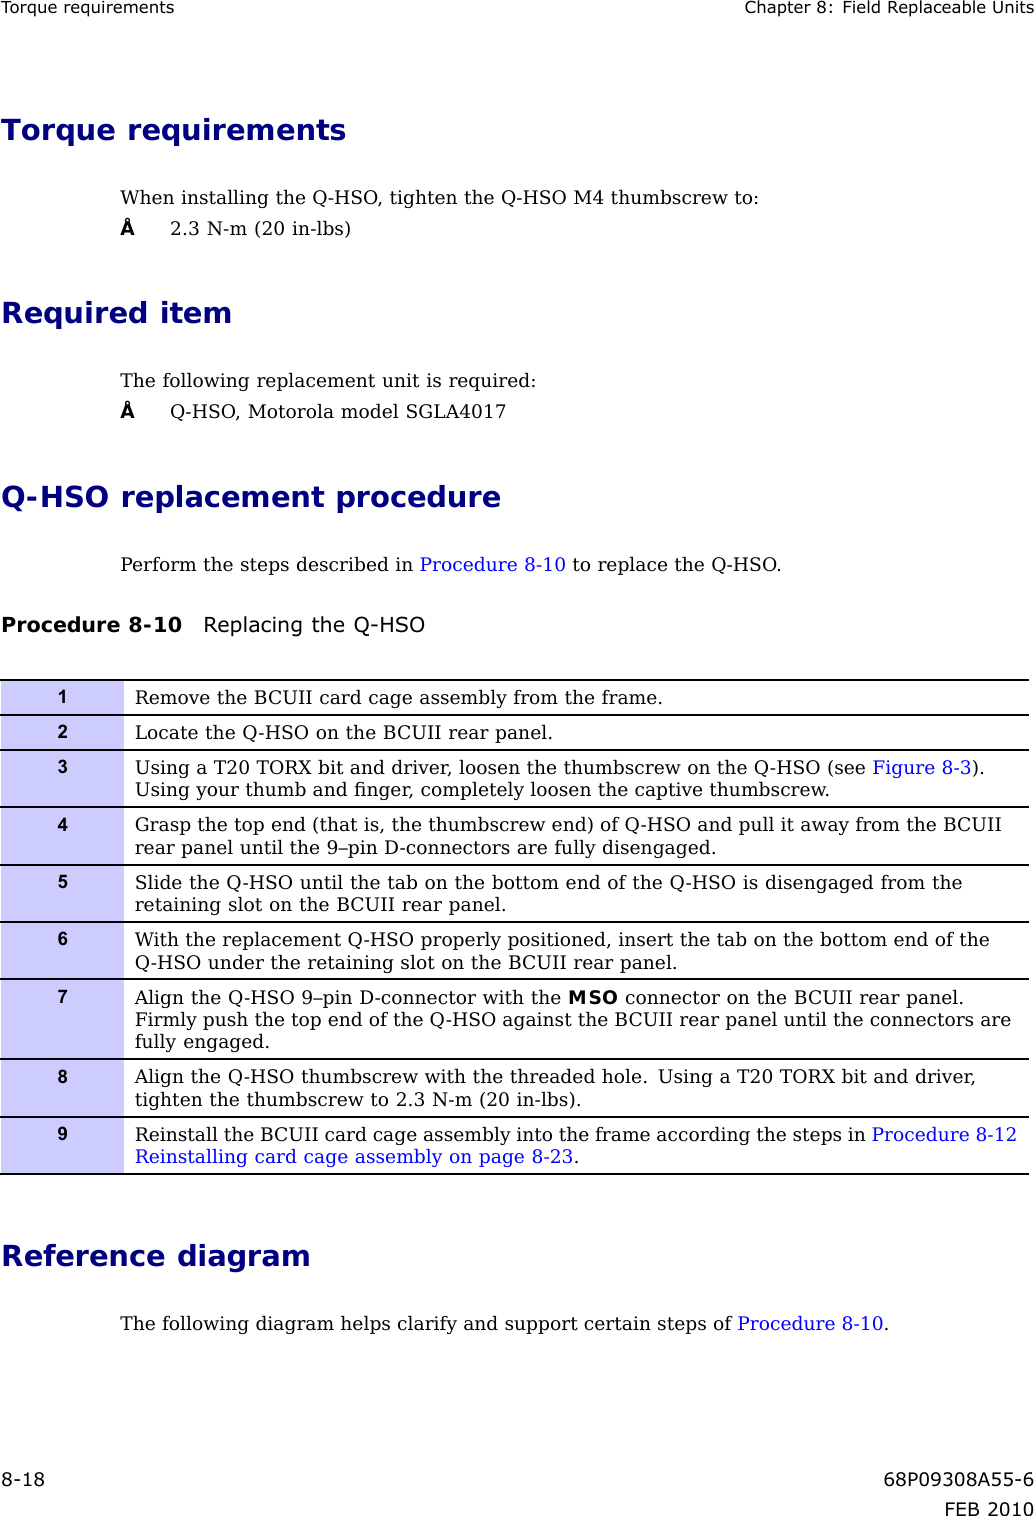 TorquerequirementsChapter8:FieldReplaceableUnitsTorquerequirementsWheninstallingtheQ-HSO,tightentheQ-HSOM4thumbscrewto:•2.3N-m(20in-lbs)RequireditemThefollowingreplacementunitisrequired:•Q-HSO,MotorolamodelSGLA4017Q-HSOreplacementprocedurePerformthestepsdescribedinProcedure8-10toreplacetheQ-HSO.Procedure8-10ReplacingtheQ-HSO1RemovetheBCUIIcardcageassemblyfromtheframe.2LocatetheQ-HSOontheBCUIIrearpanel.3UsingaT20TORXbitanddriver ,loosenthethumbscrewontheQ-HSO(seeFigure8-3).Usingyourthumbandnger ,completelyloosenthecaptivethumbscrew .4Graspthetopend(thatis,thethumbscrewend)ofQ-HSOandpullitawayfromtheBCUIIrearpaneluntilthe9–pinD-connectorsarefullydisengaged.5SlidetheQ-HSOuntilthetabonthebottomendoftheQ-HSOisdisengagedfromtheretainingslotontheBCUIIrearpanel.6WiththereplacementQ-HSOproperlypositioned,insertthetabonthebottomendoftheQ-HSOundertheretainingslotontheBCUIIrearpanel.7AligntheQ-HSO9–pinD-connectorwiththeMSOconnectorontheBCUIIrearpanel.FirmlypushthetopendoftheQ-HSOagainsttheBCUIIrearpaneluntiltheconnectorsarefullyengaged.8AligntheQ-HSOthumbscrewwiththethreadedhole.UsingaT20TORXbitanddriver,tightenthethumbscrewto2.3N-m(20in-lbs).9ReinstalltheBCUIIcardcageassemblyintotheframeaccordingthestepsinProcedure8-12Reinstallingcardcageassemblyonpage8-23.ReferencediagramThefollowingdiagramhelpsclarifyandsupportcertainstepsofProcedure8-10.8-1868P09308A55-6FEB2010